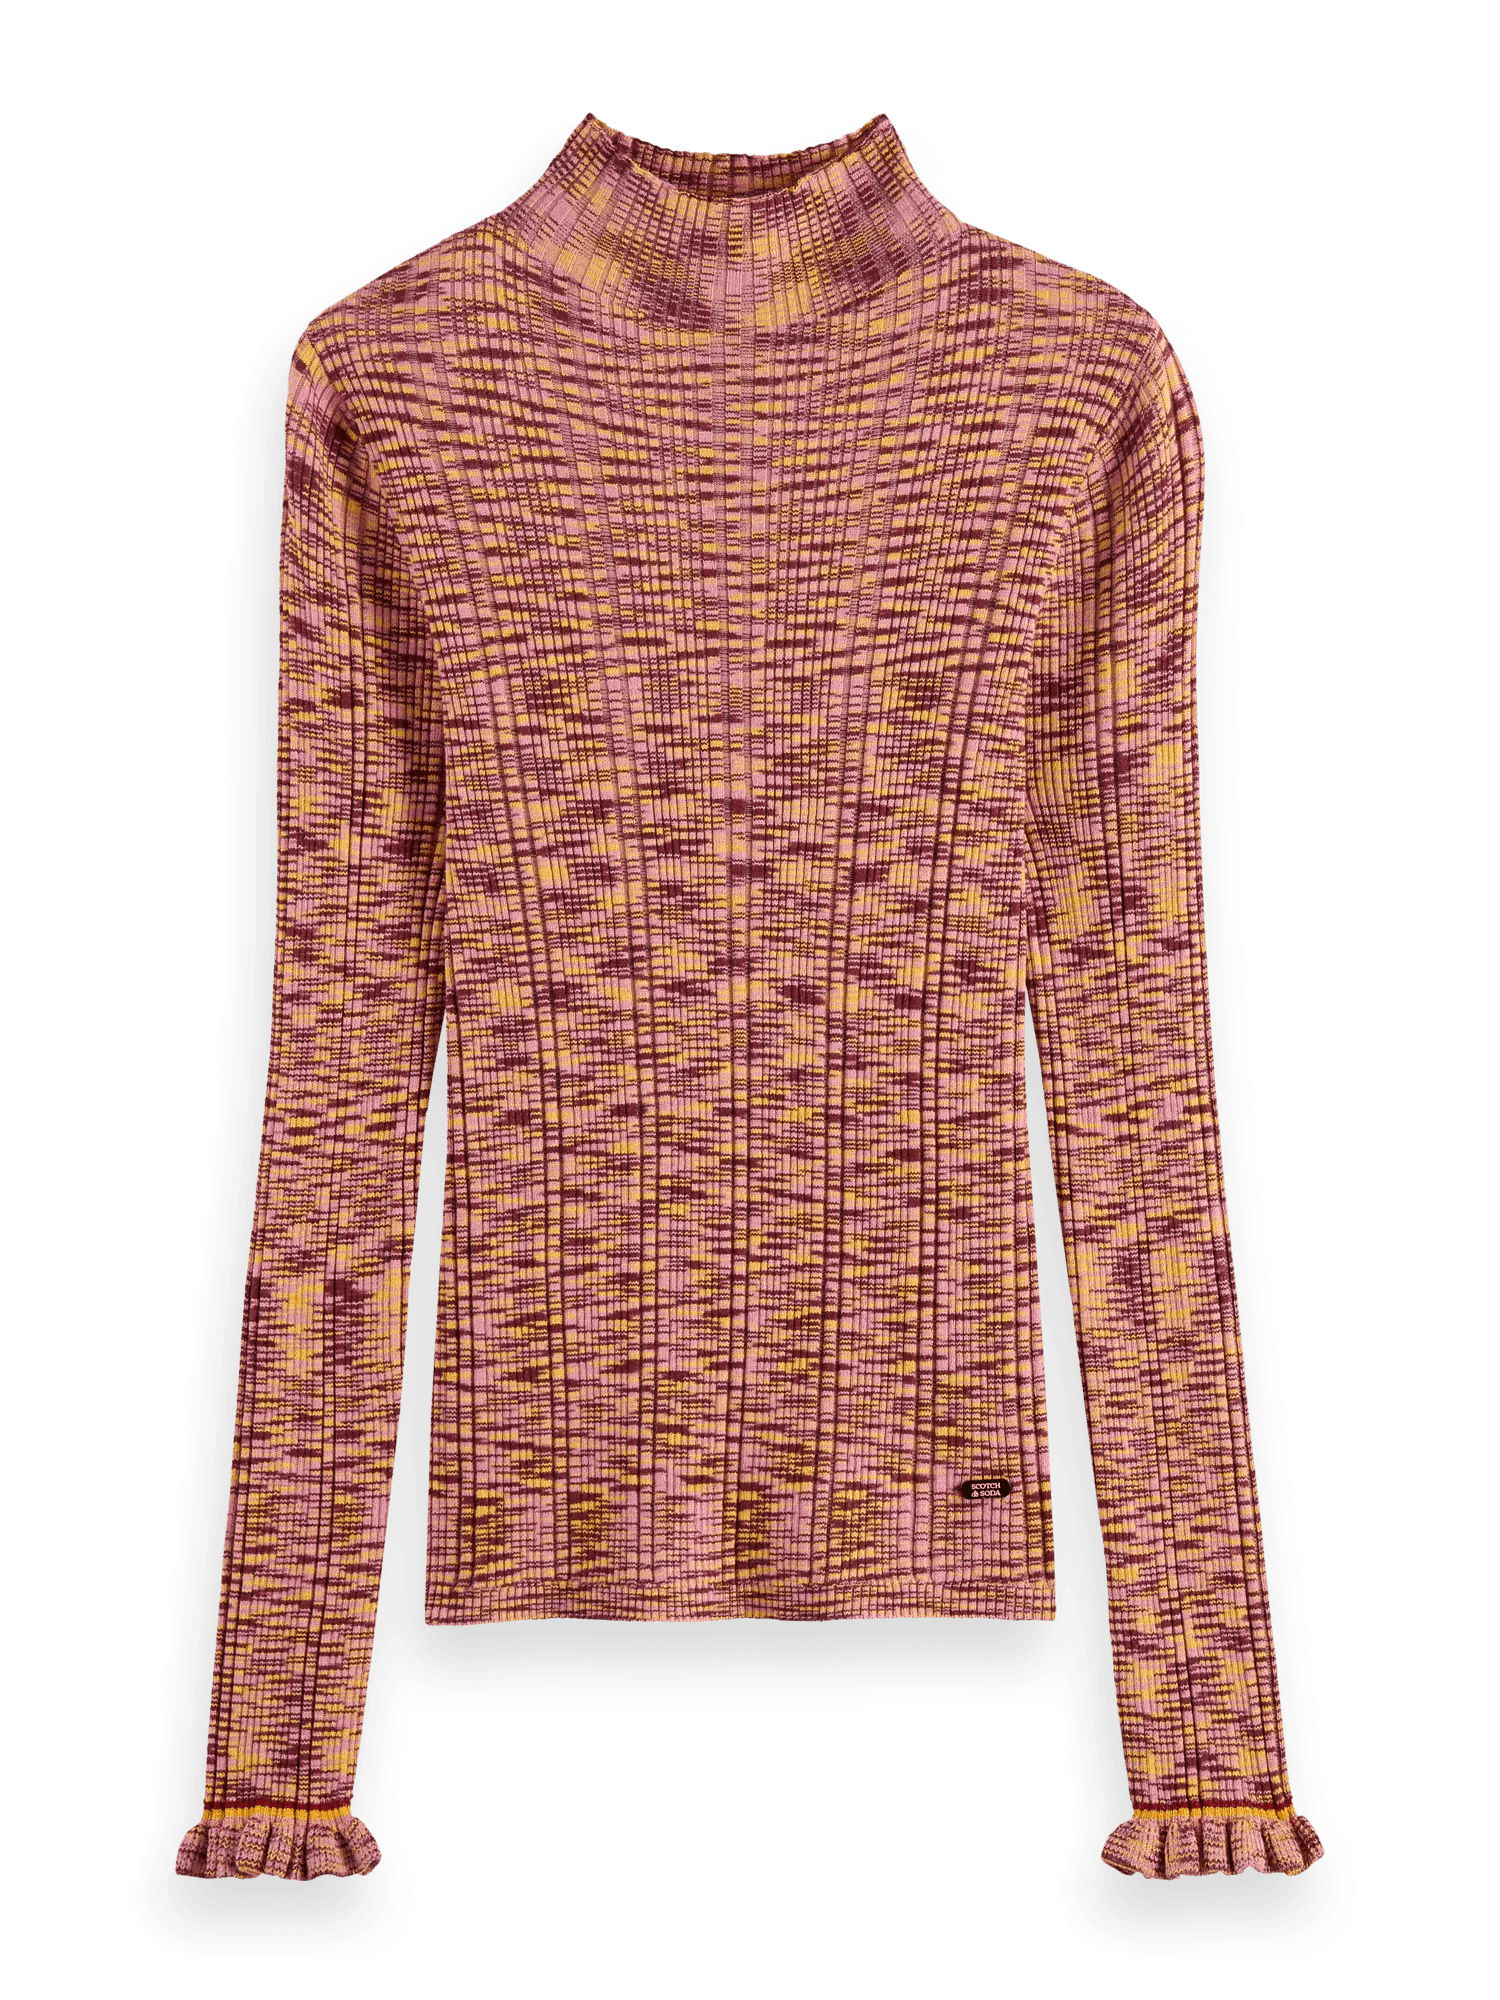 Ribbed turtleneck sweater